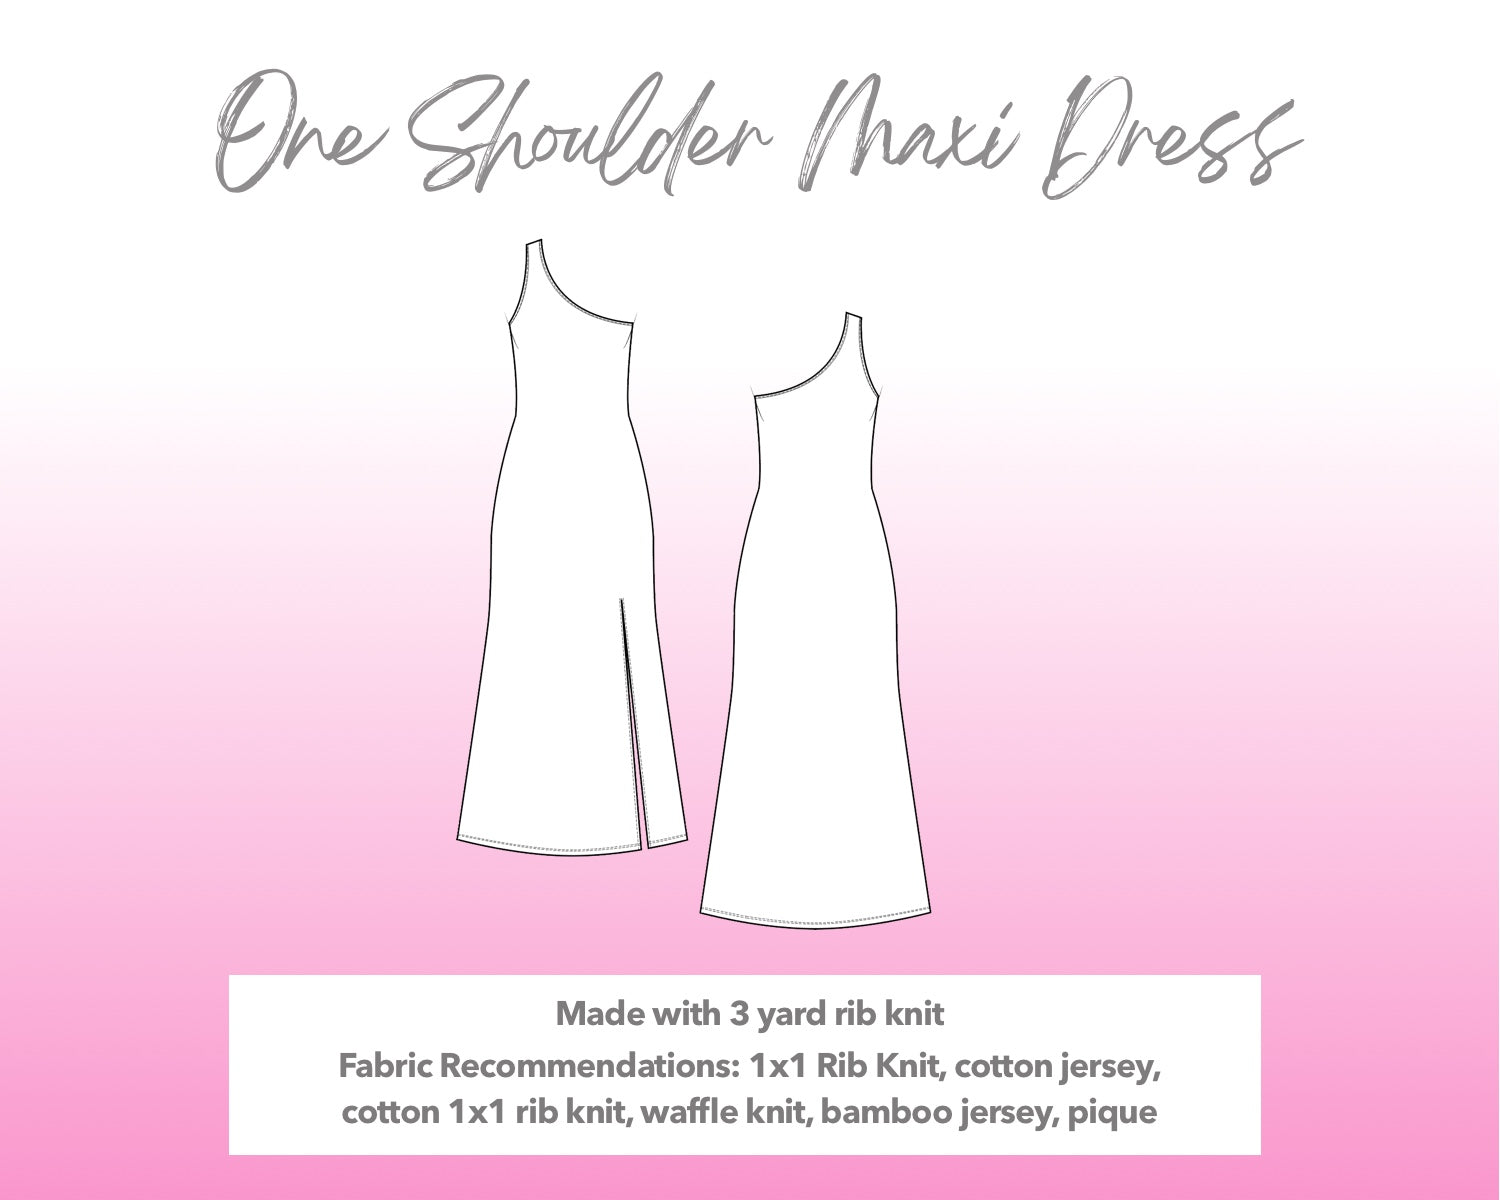 Illustration and detailed description for One Shoulder Maxi Dress sewing pattern.